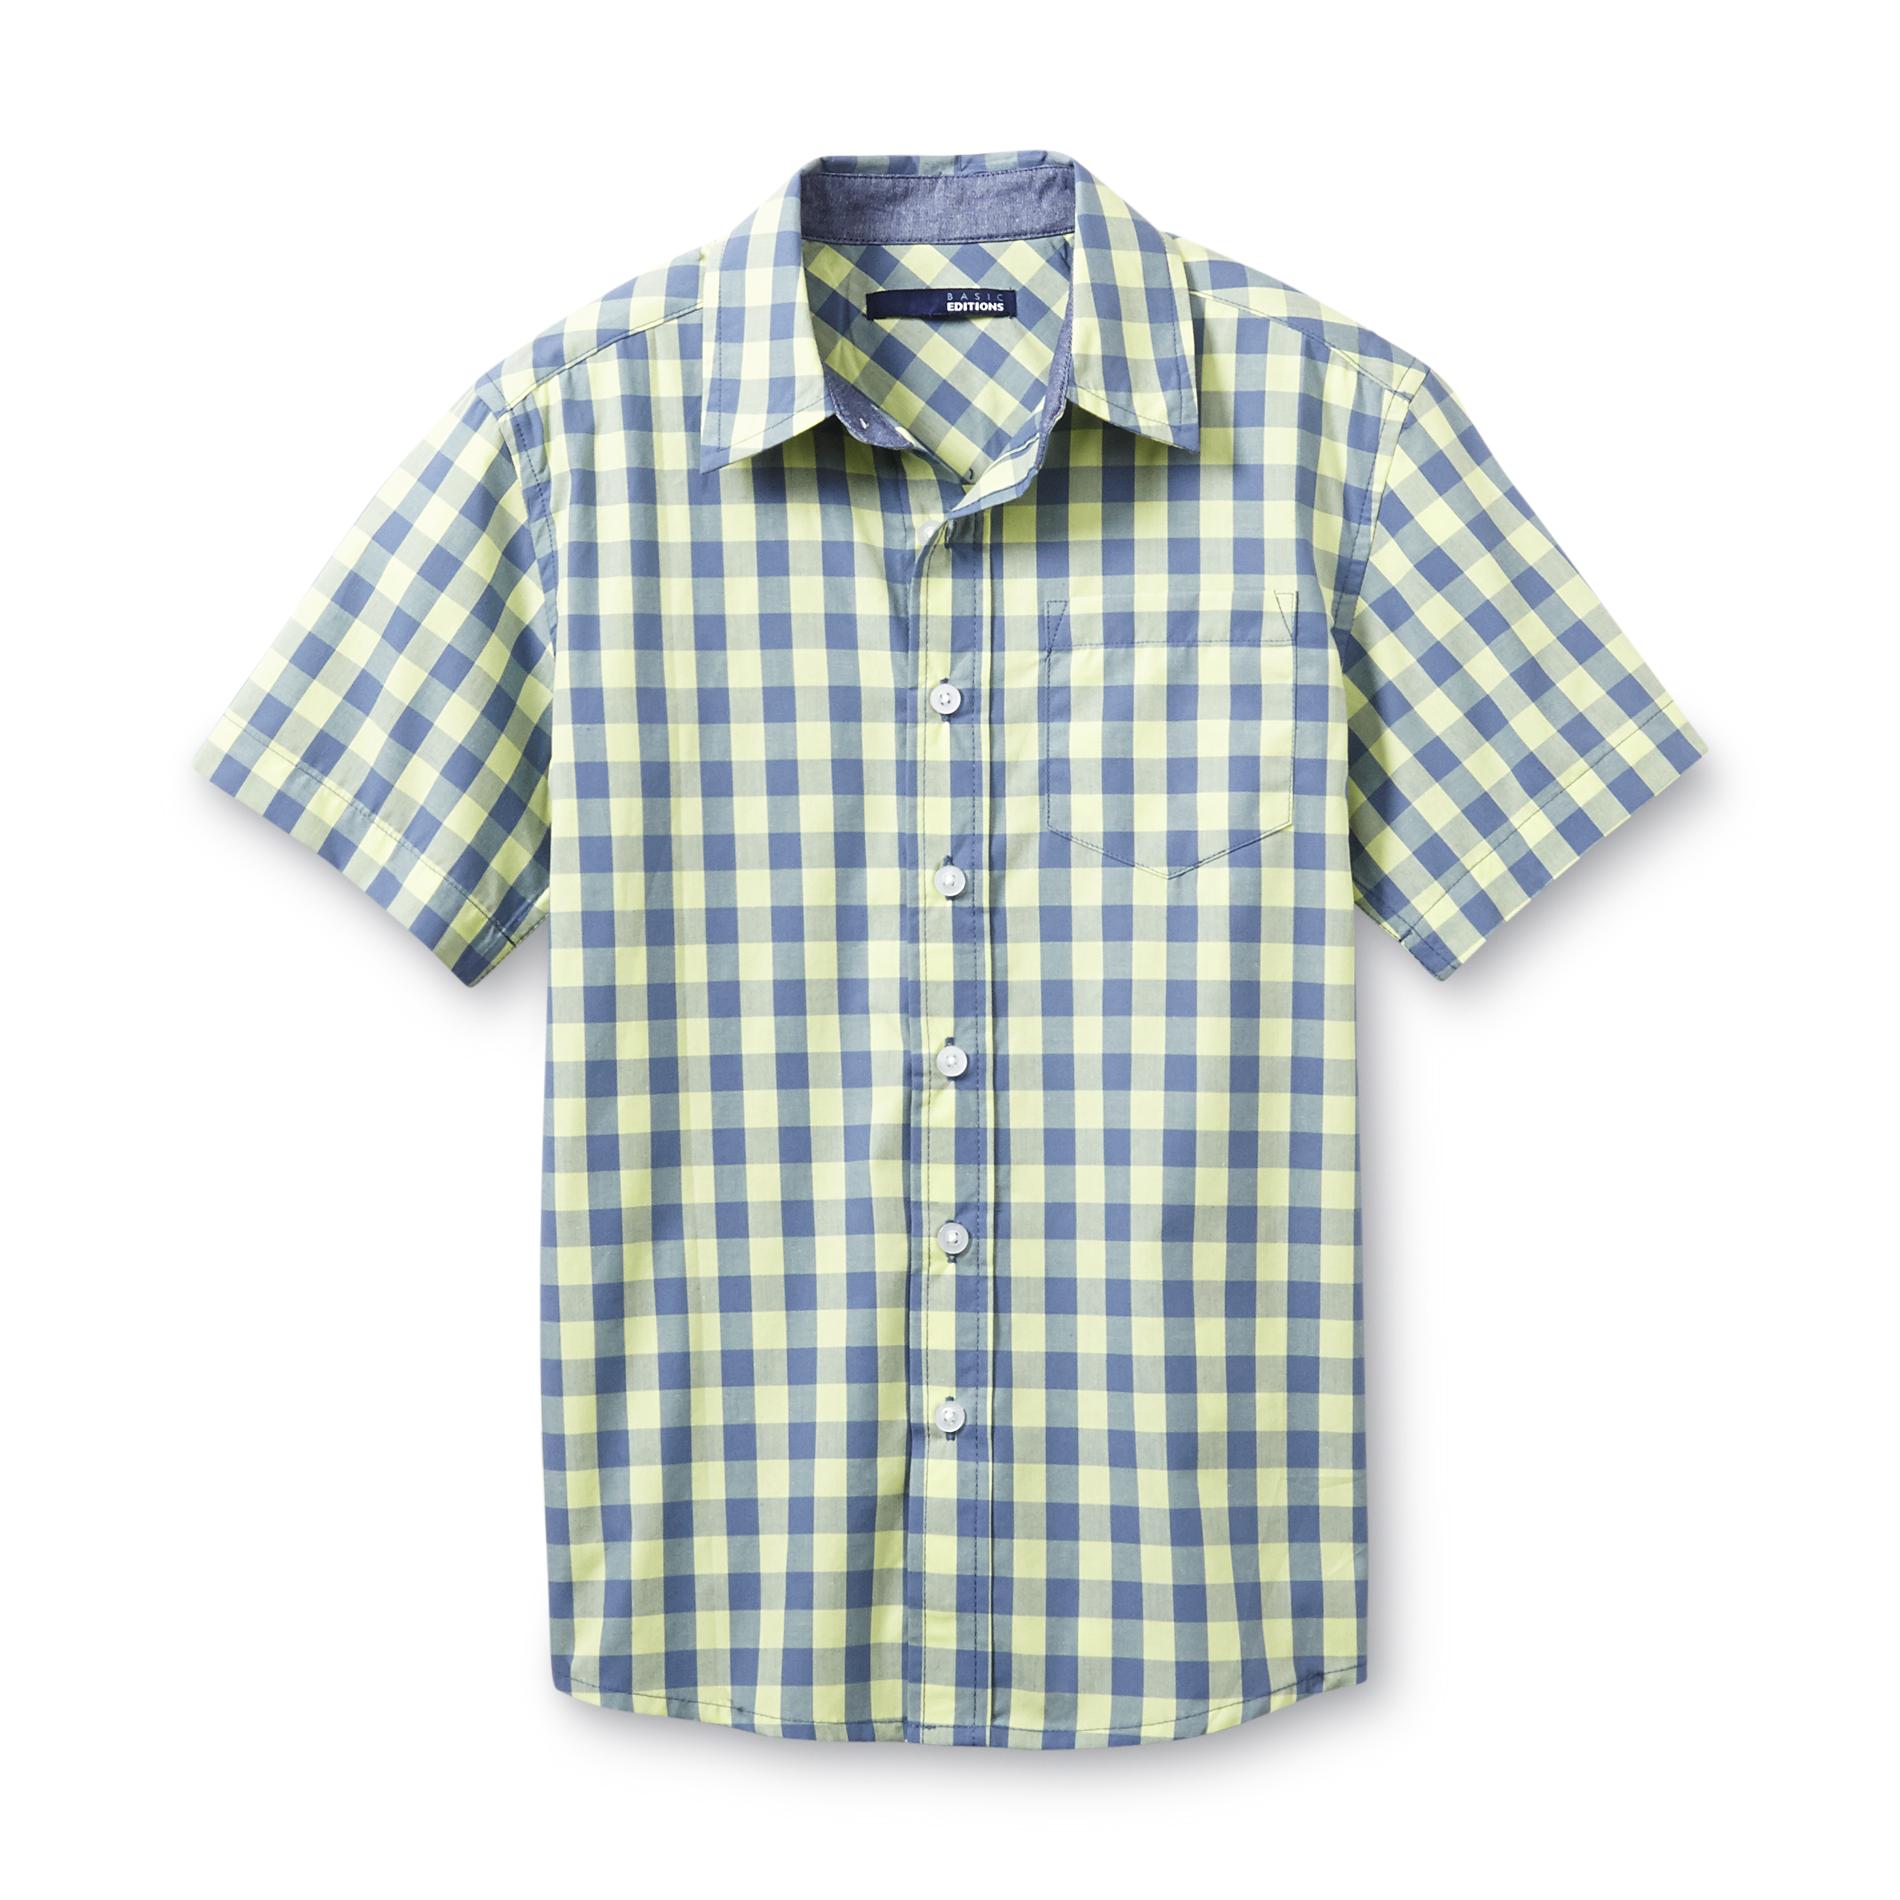 Basic Editions Boy's Button-Front Shirt - Plaid